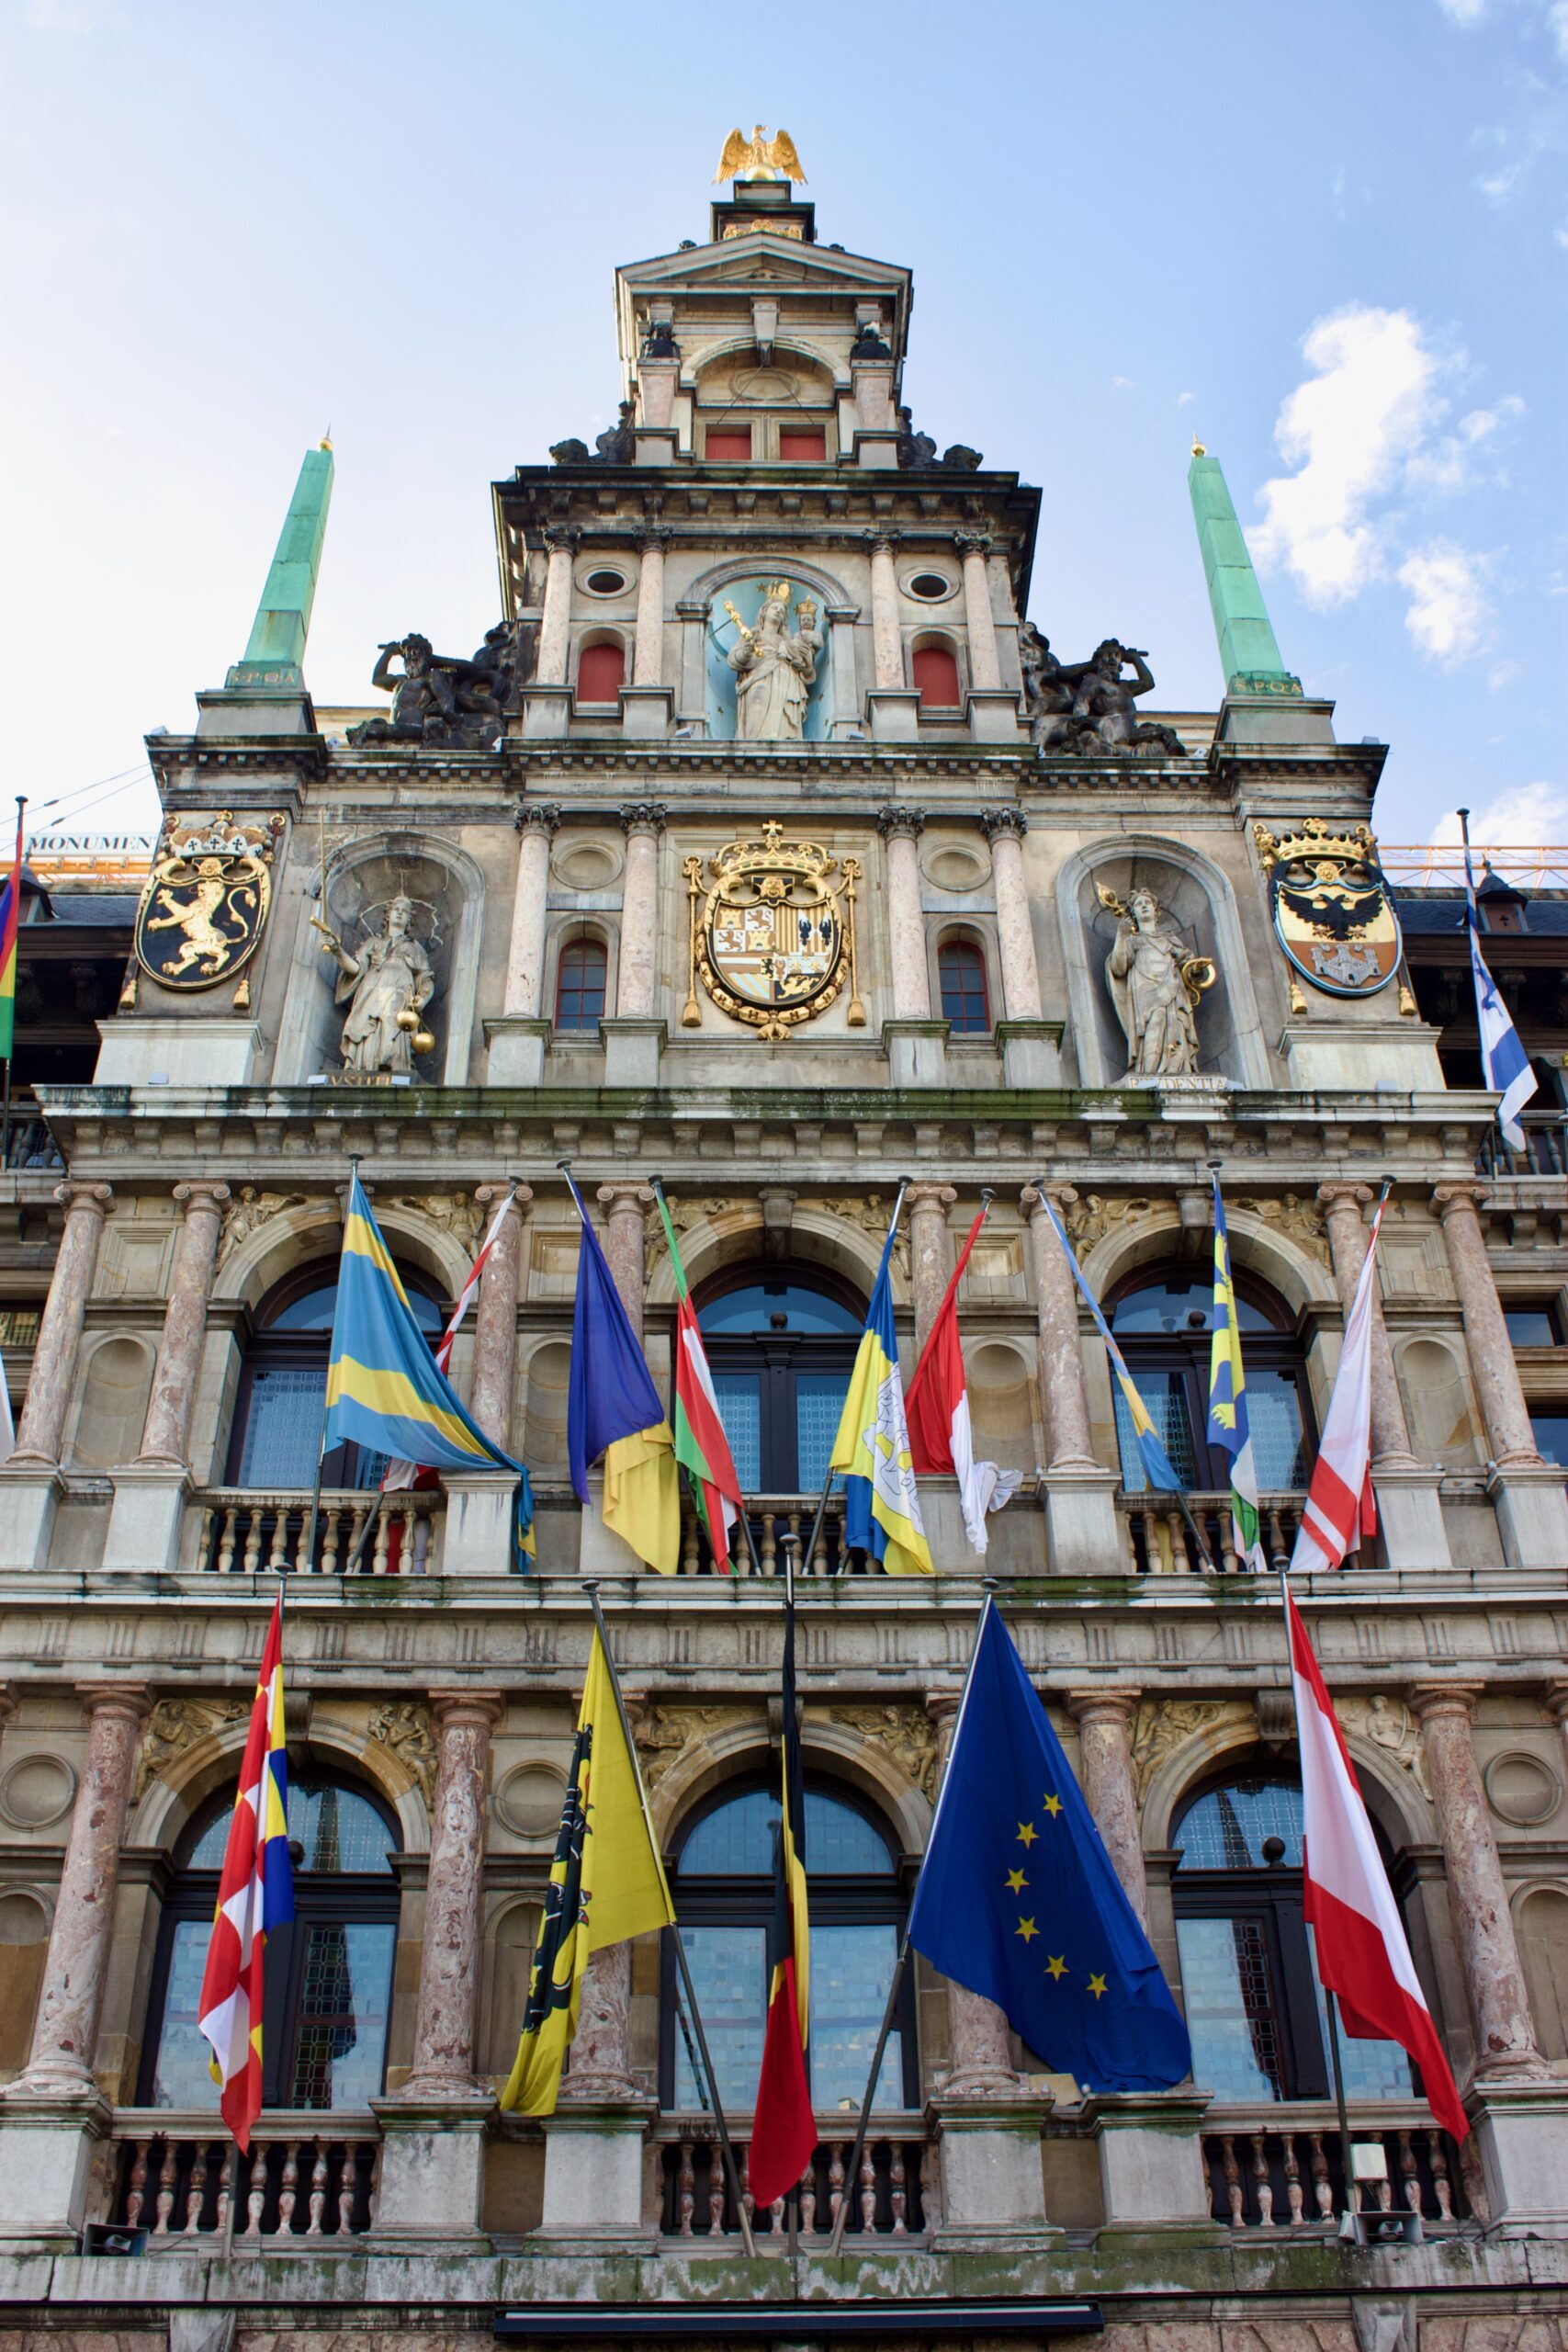 Grote Markt Antwerp City Hall